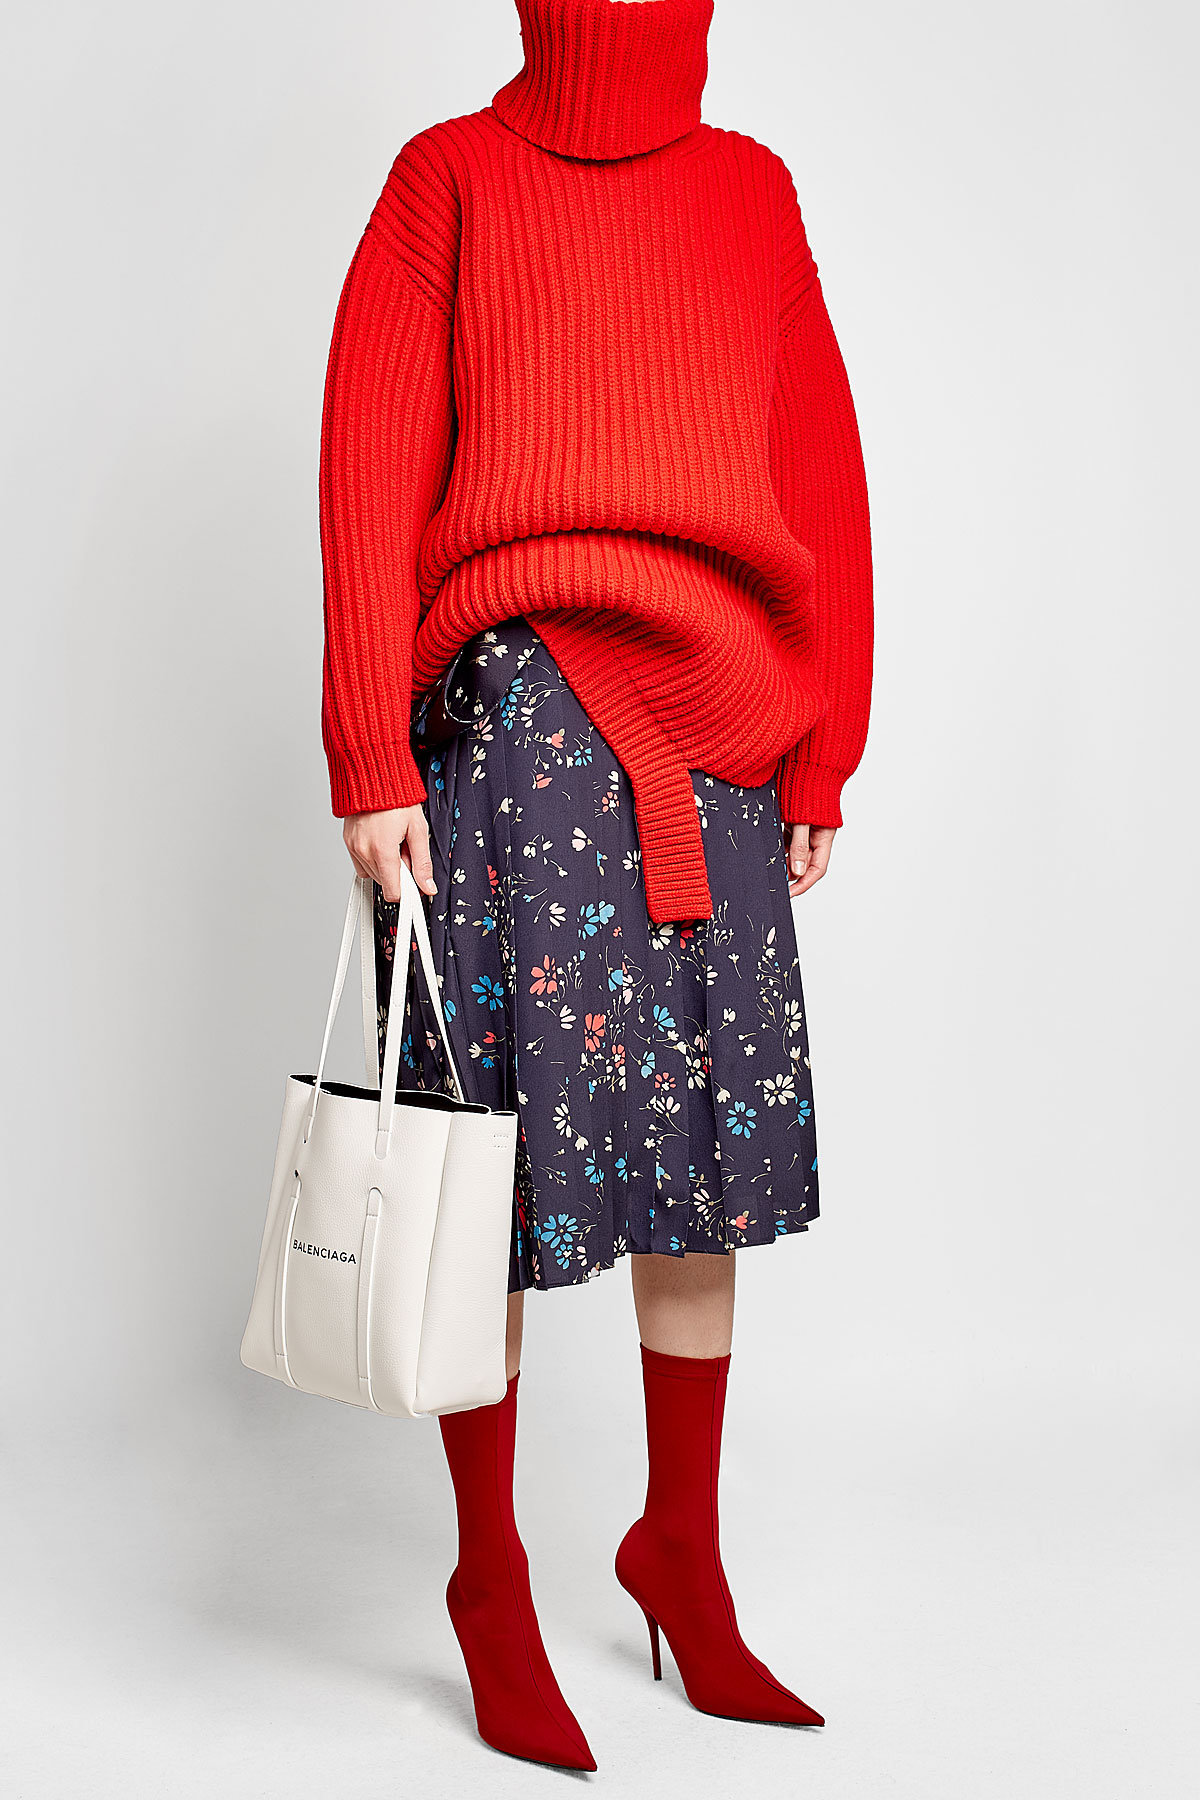 Balenciaga red Deconstructed Virgin Wool Turtleneck Pullover rollneck sweater